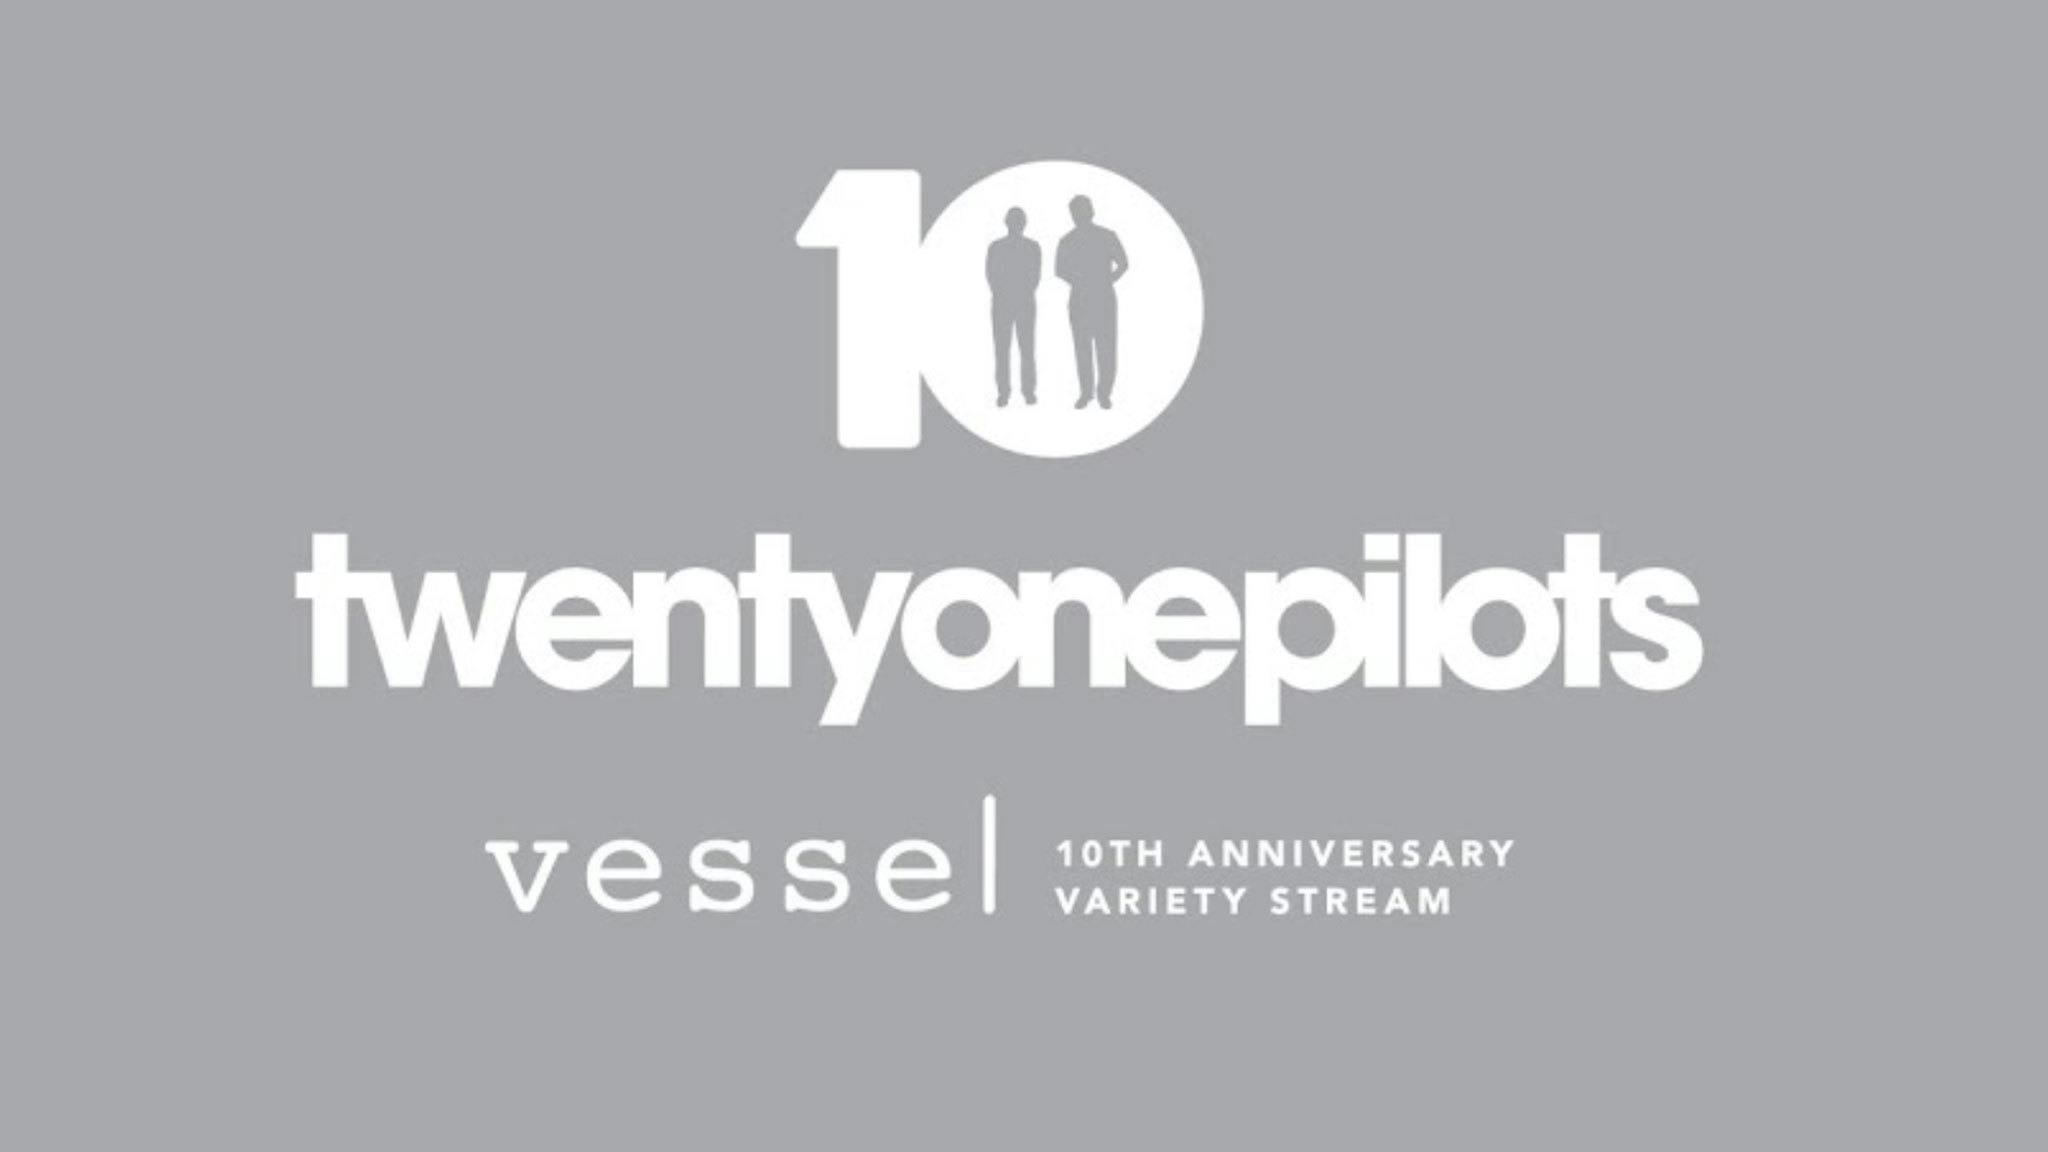 twenty one pilots announce Vessel 10th anniversary variety stream